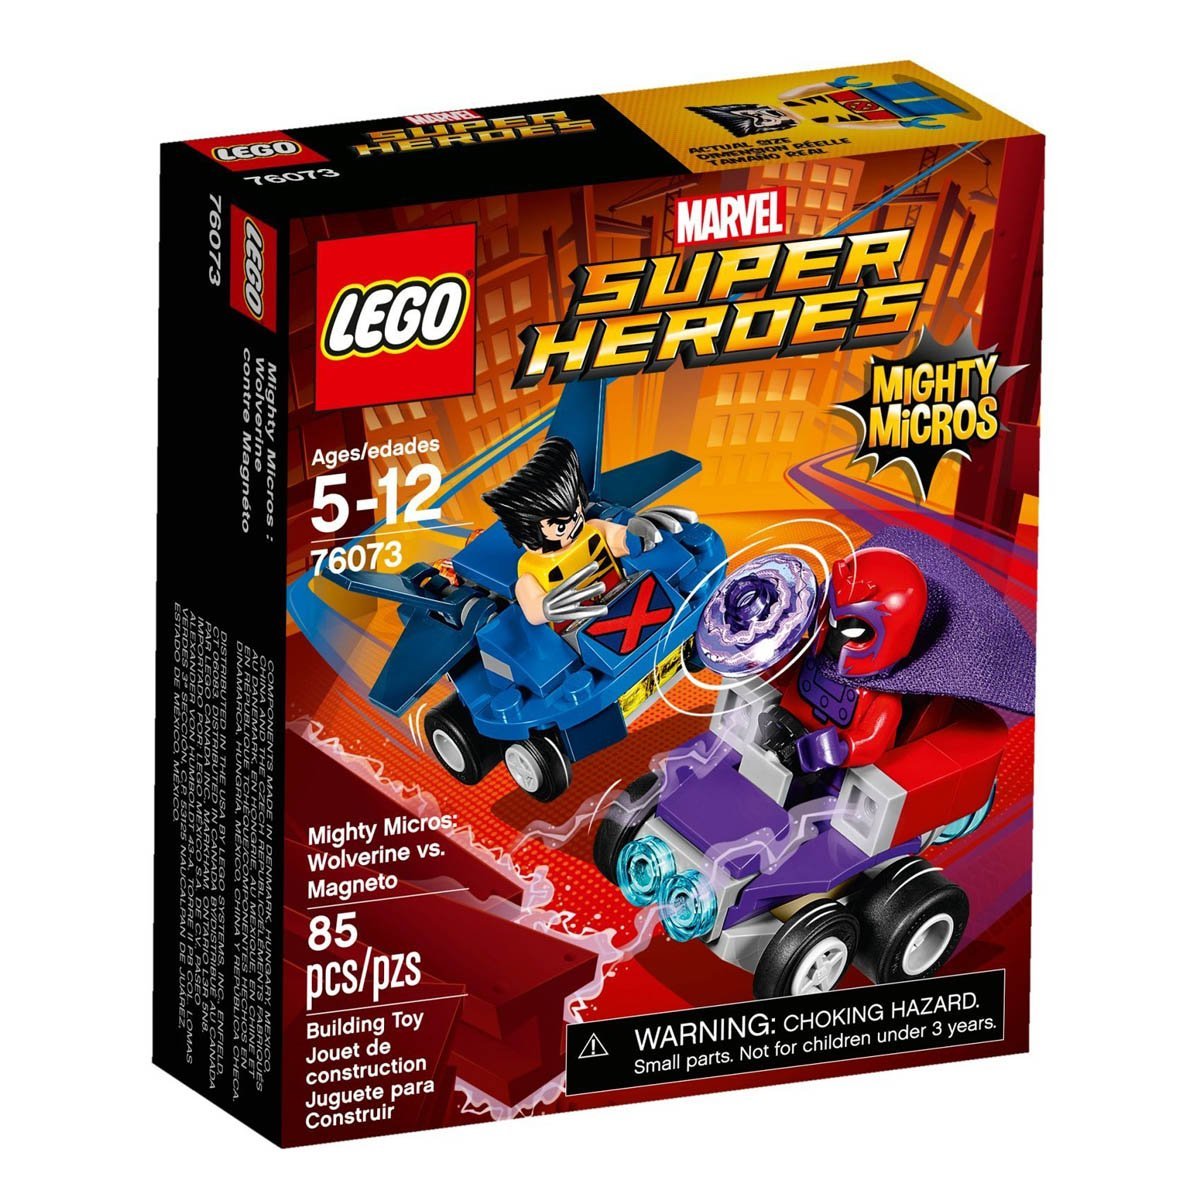 Mighty Micros Wolverine Vs. Magneto Lego